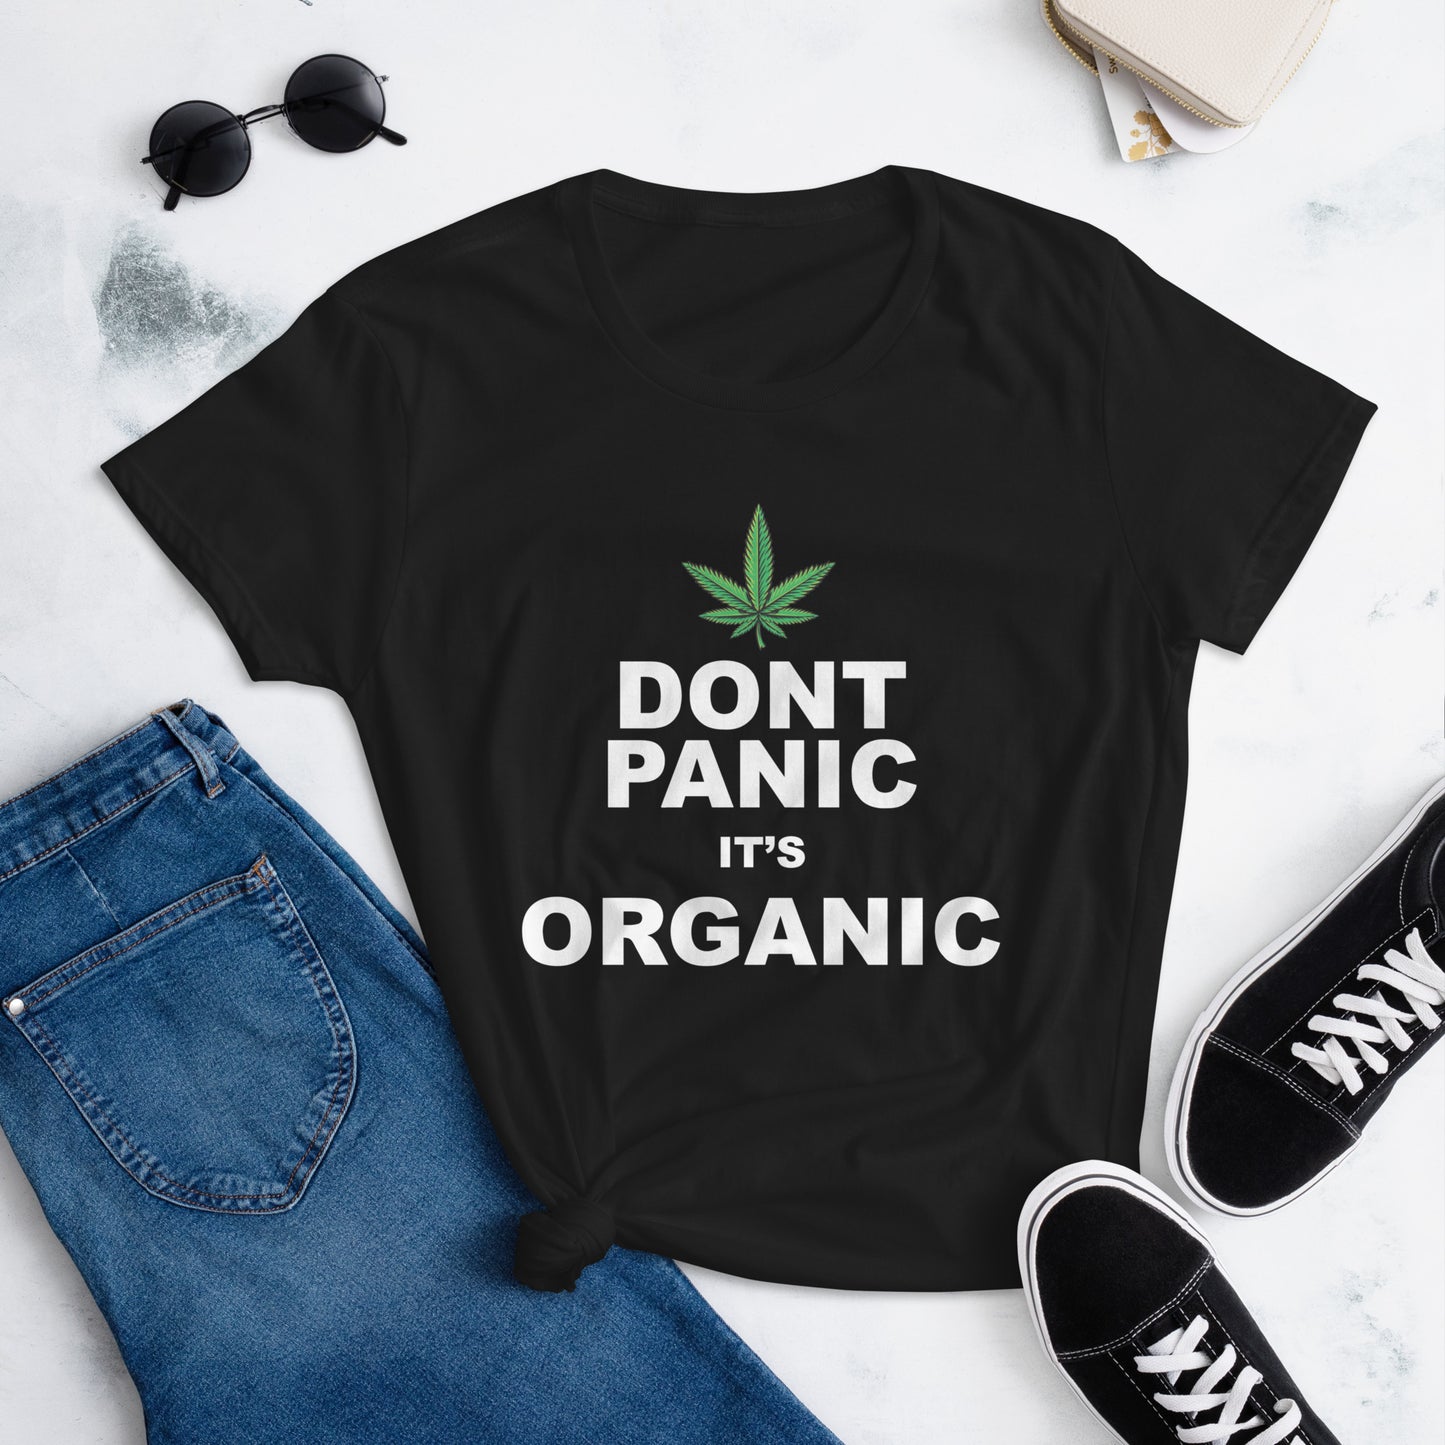 Don't Panic it's Organic - Women's T-Shirt | TheShirtfather